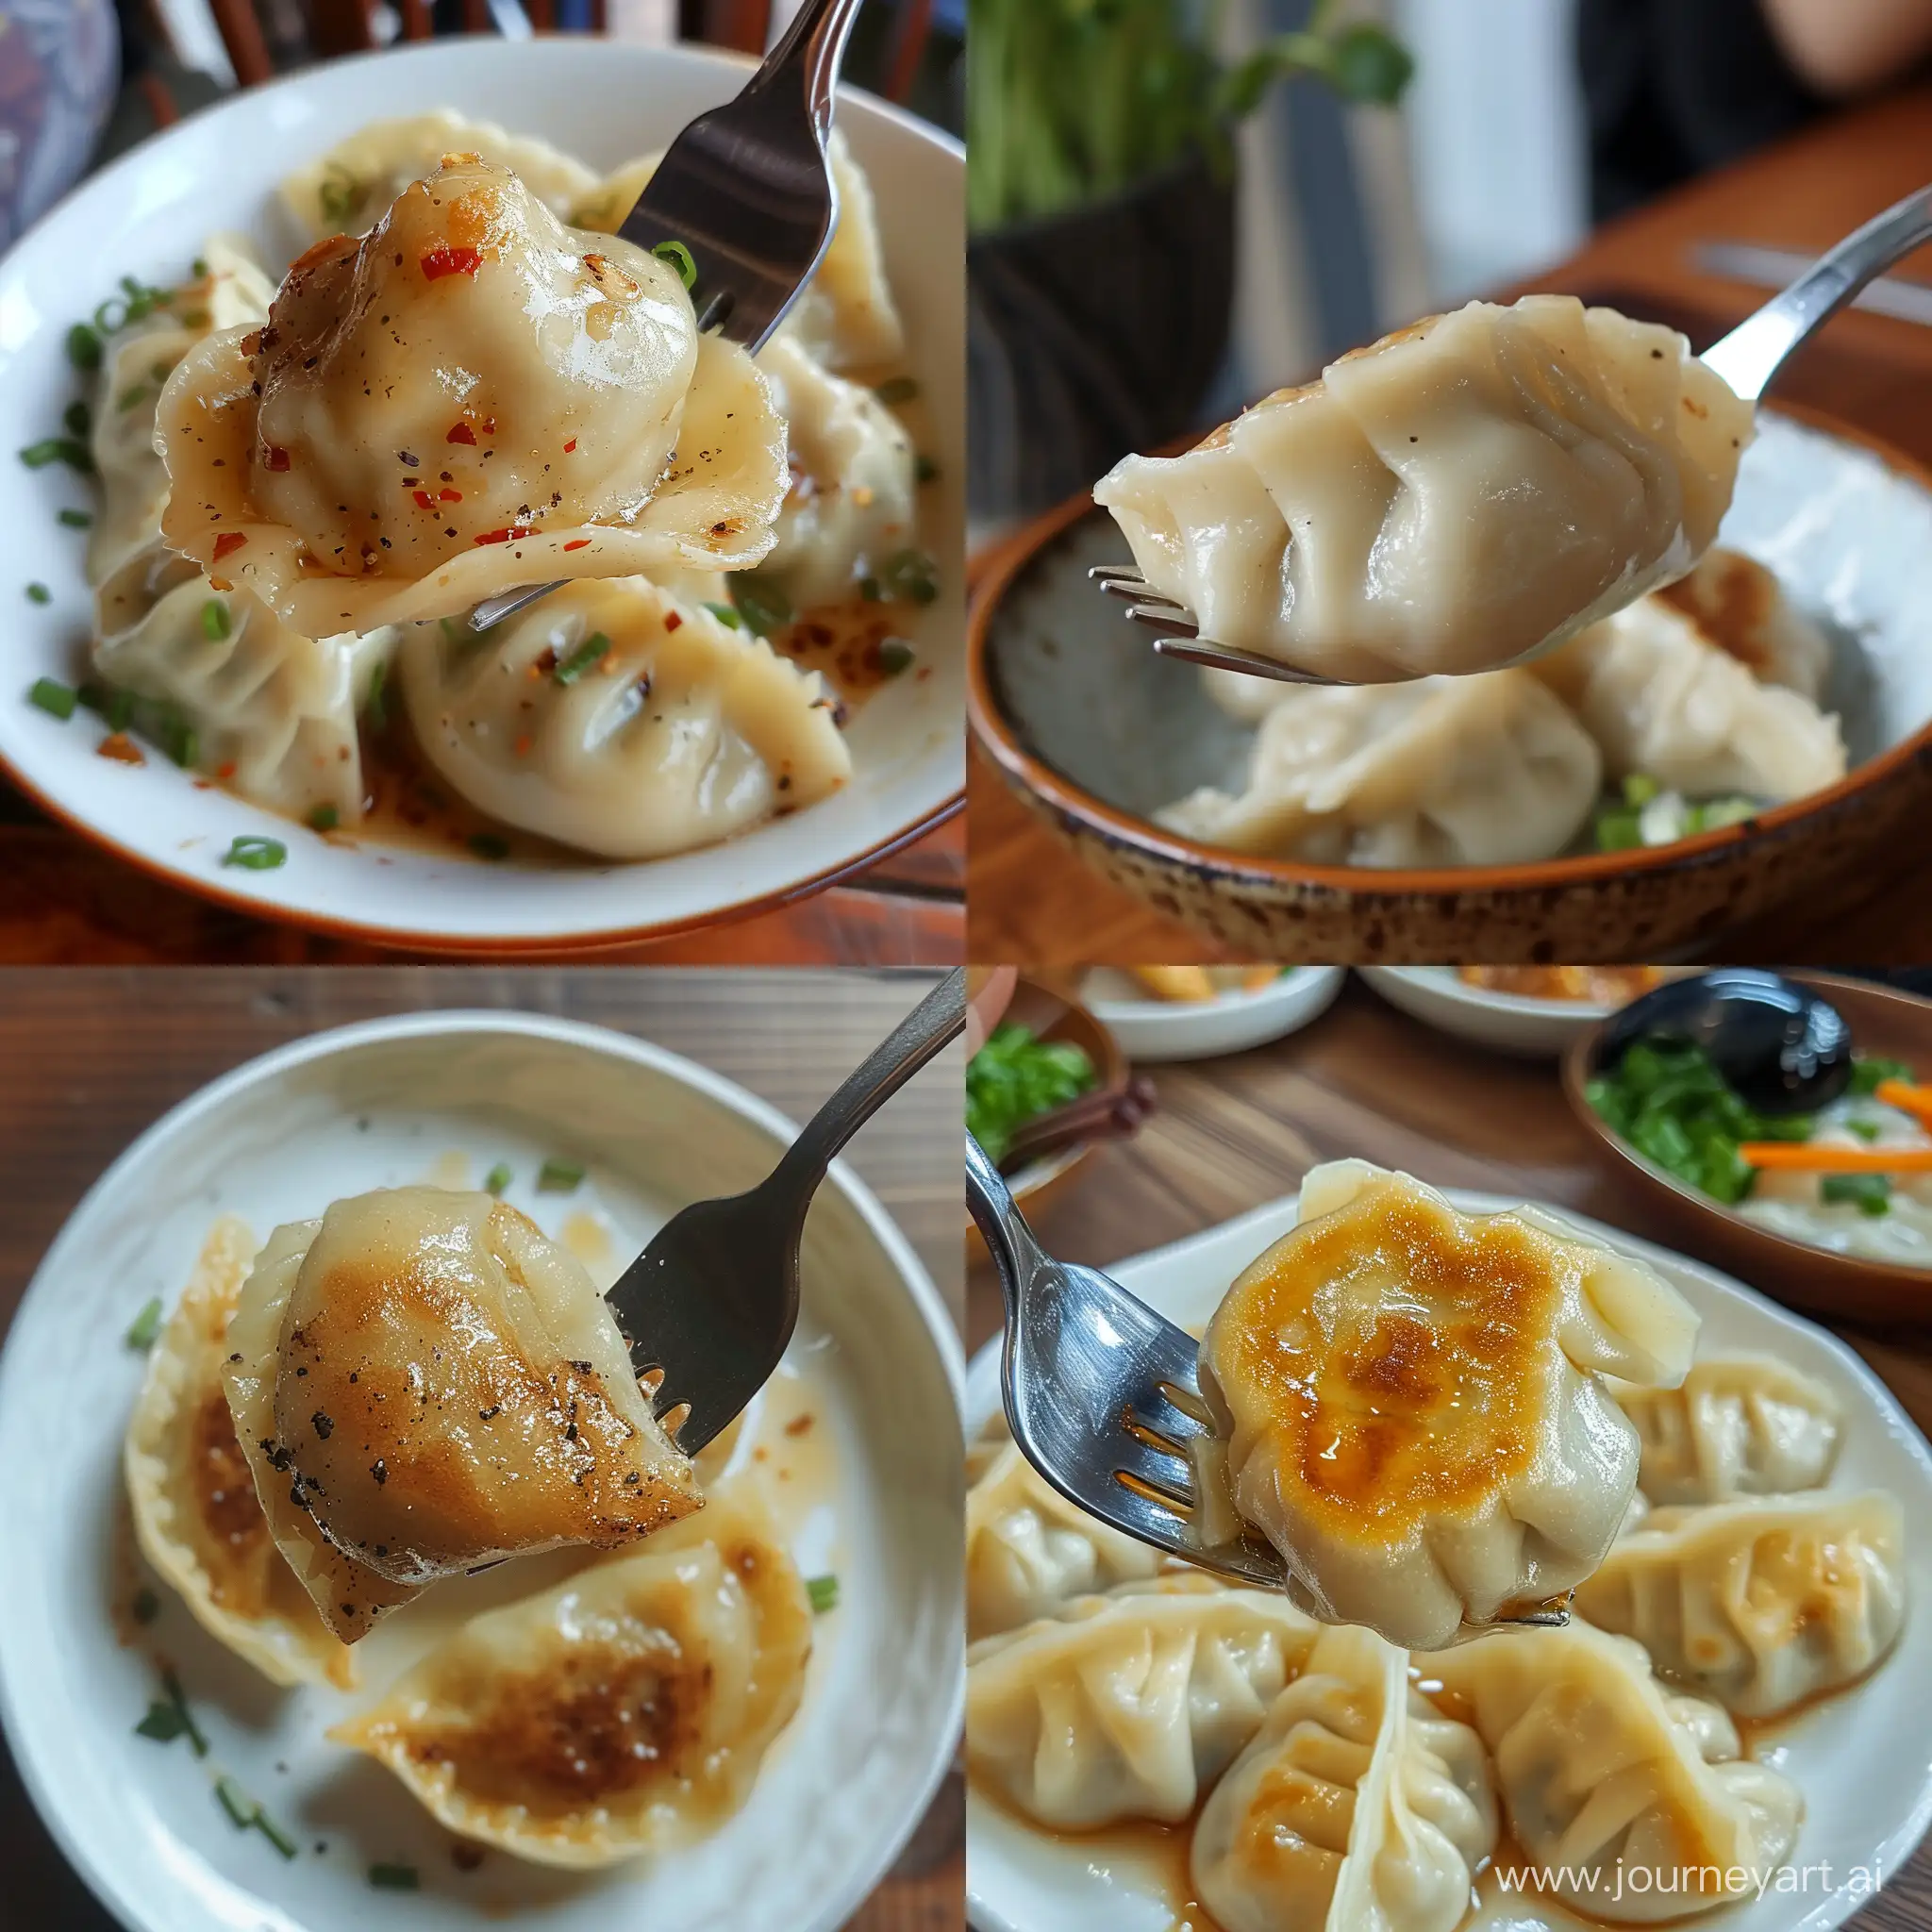 Giant-Dumpling-on-Fork-Delicious-Asian-Cuisine-Food-Art